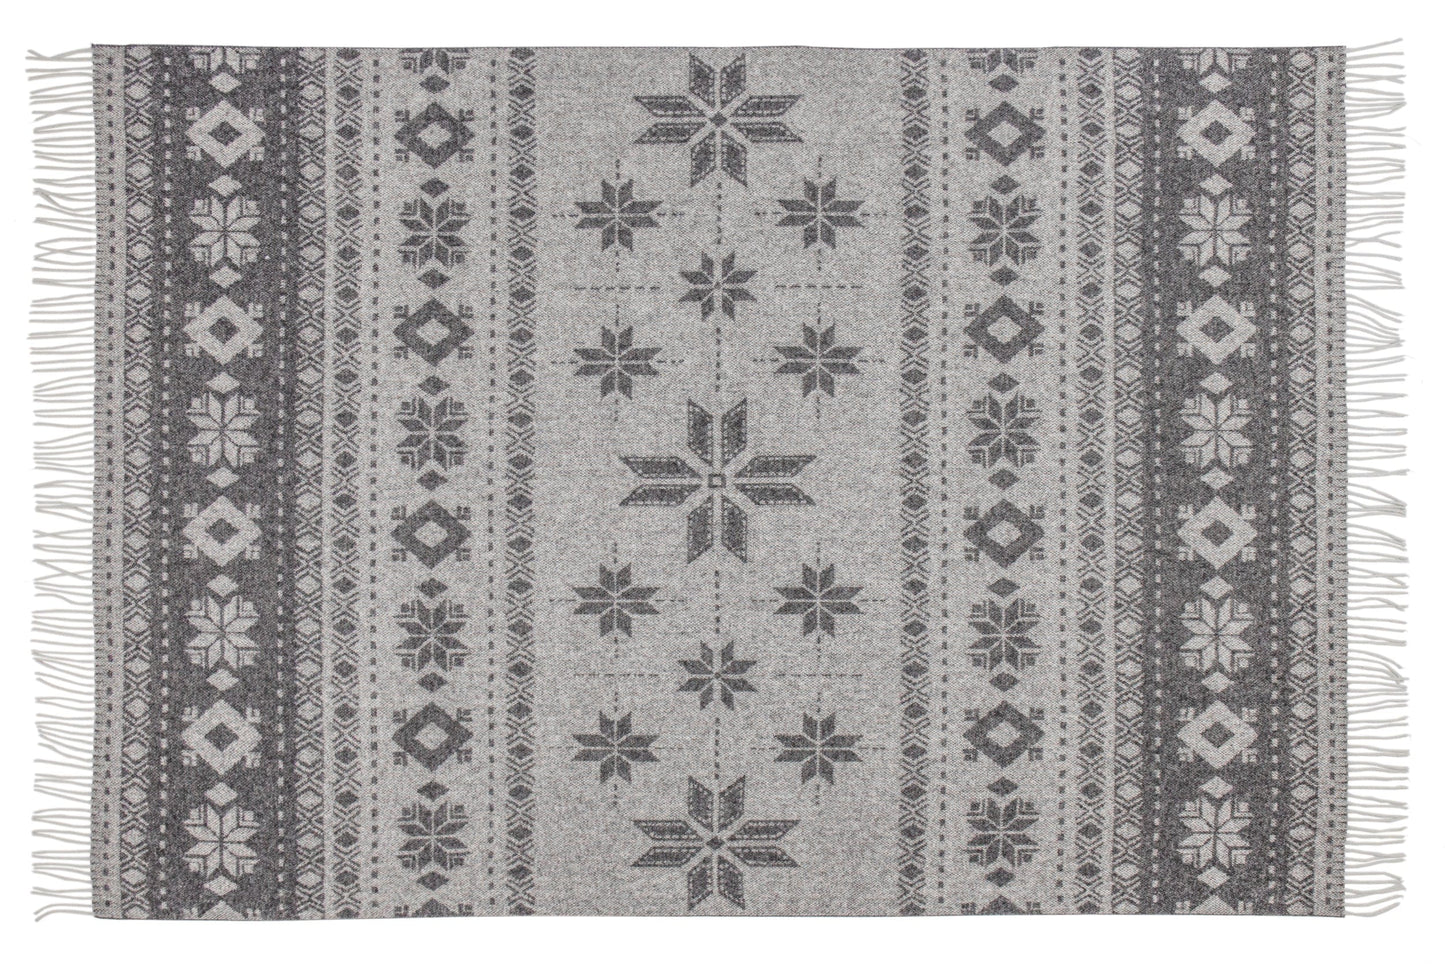 Uldplaiden Uldplaid Uldplaid i 100% uld - Mørk grå m. vintermotiv (140x200 cm) otherstuff